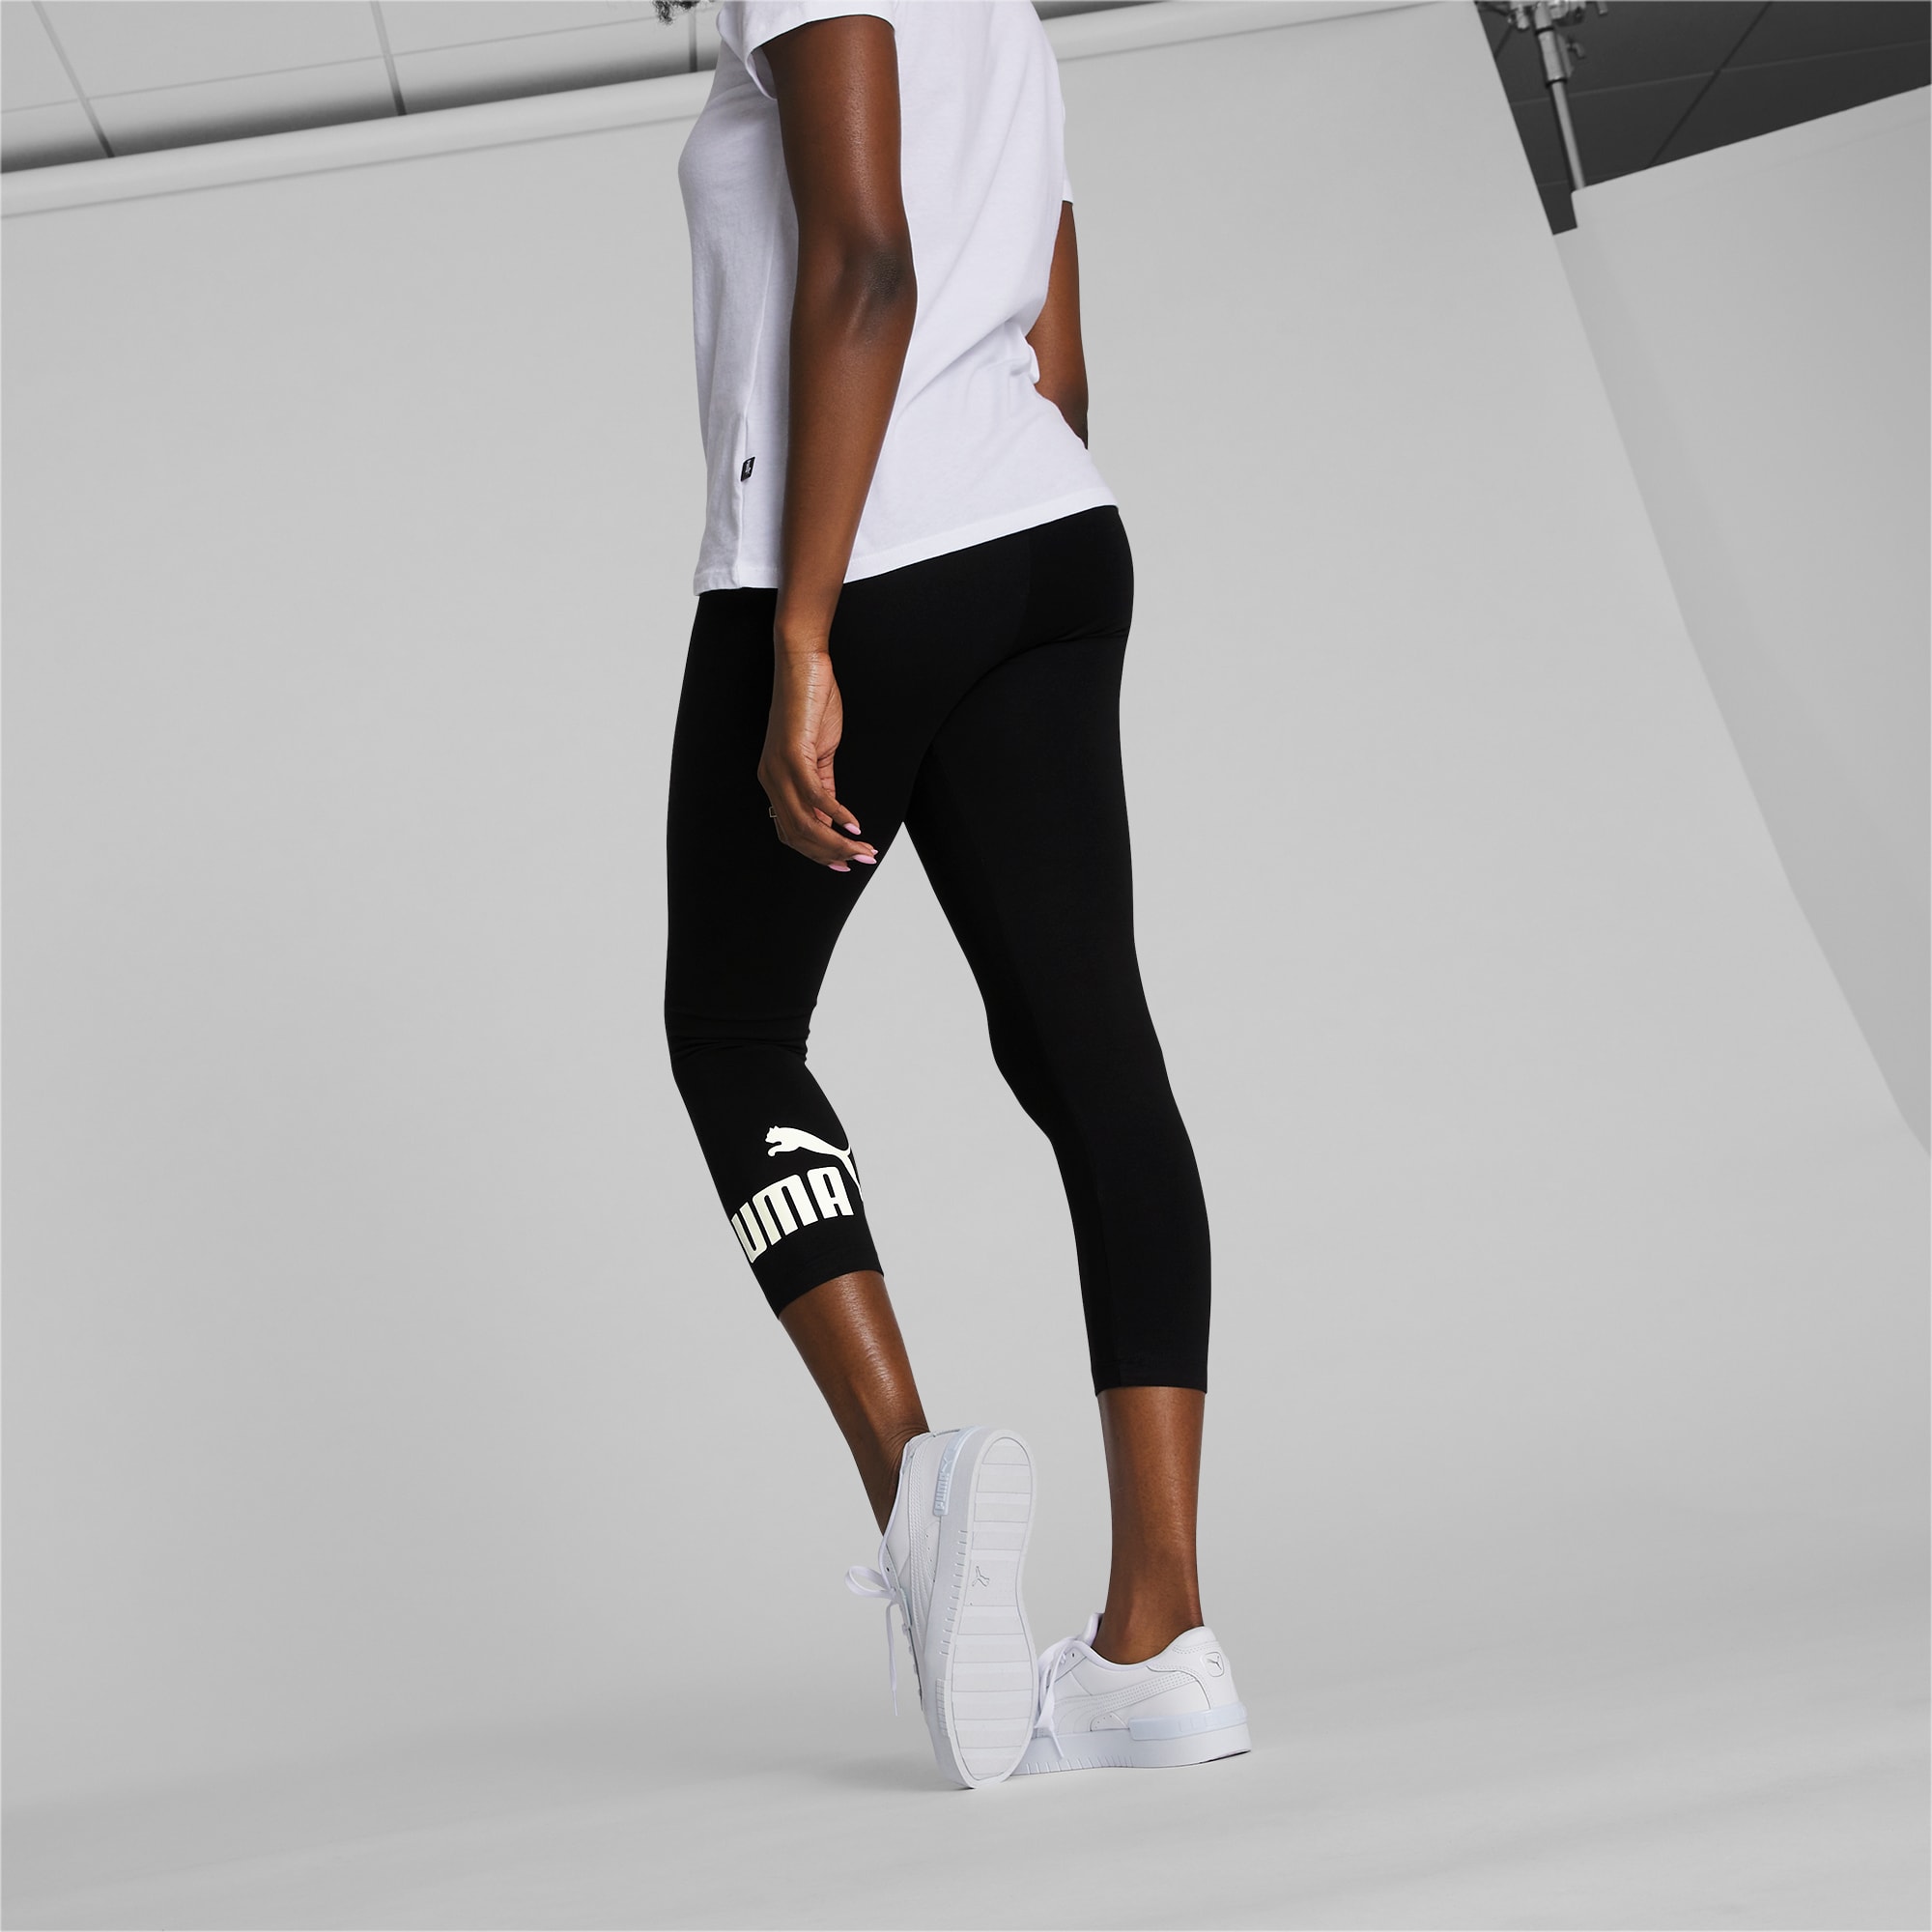 Puma Training Evoknit Leggings (Aqua), Women's Fashion, Activewear